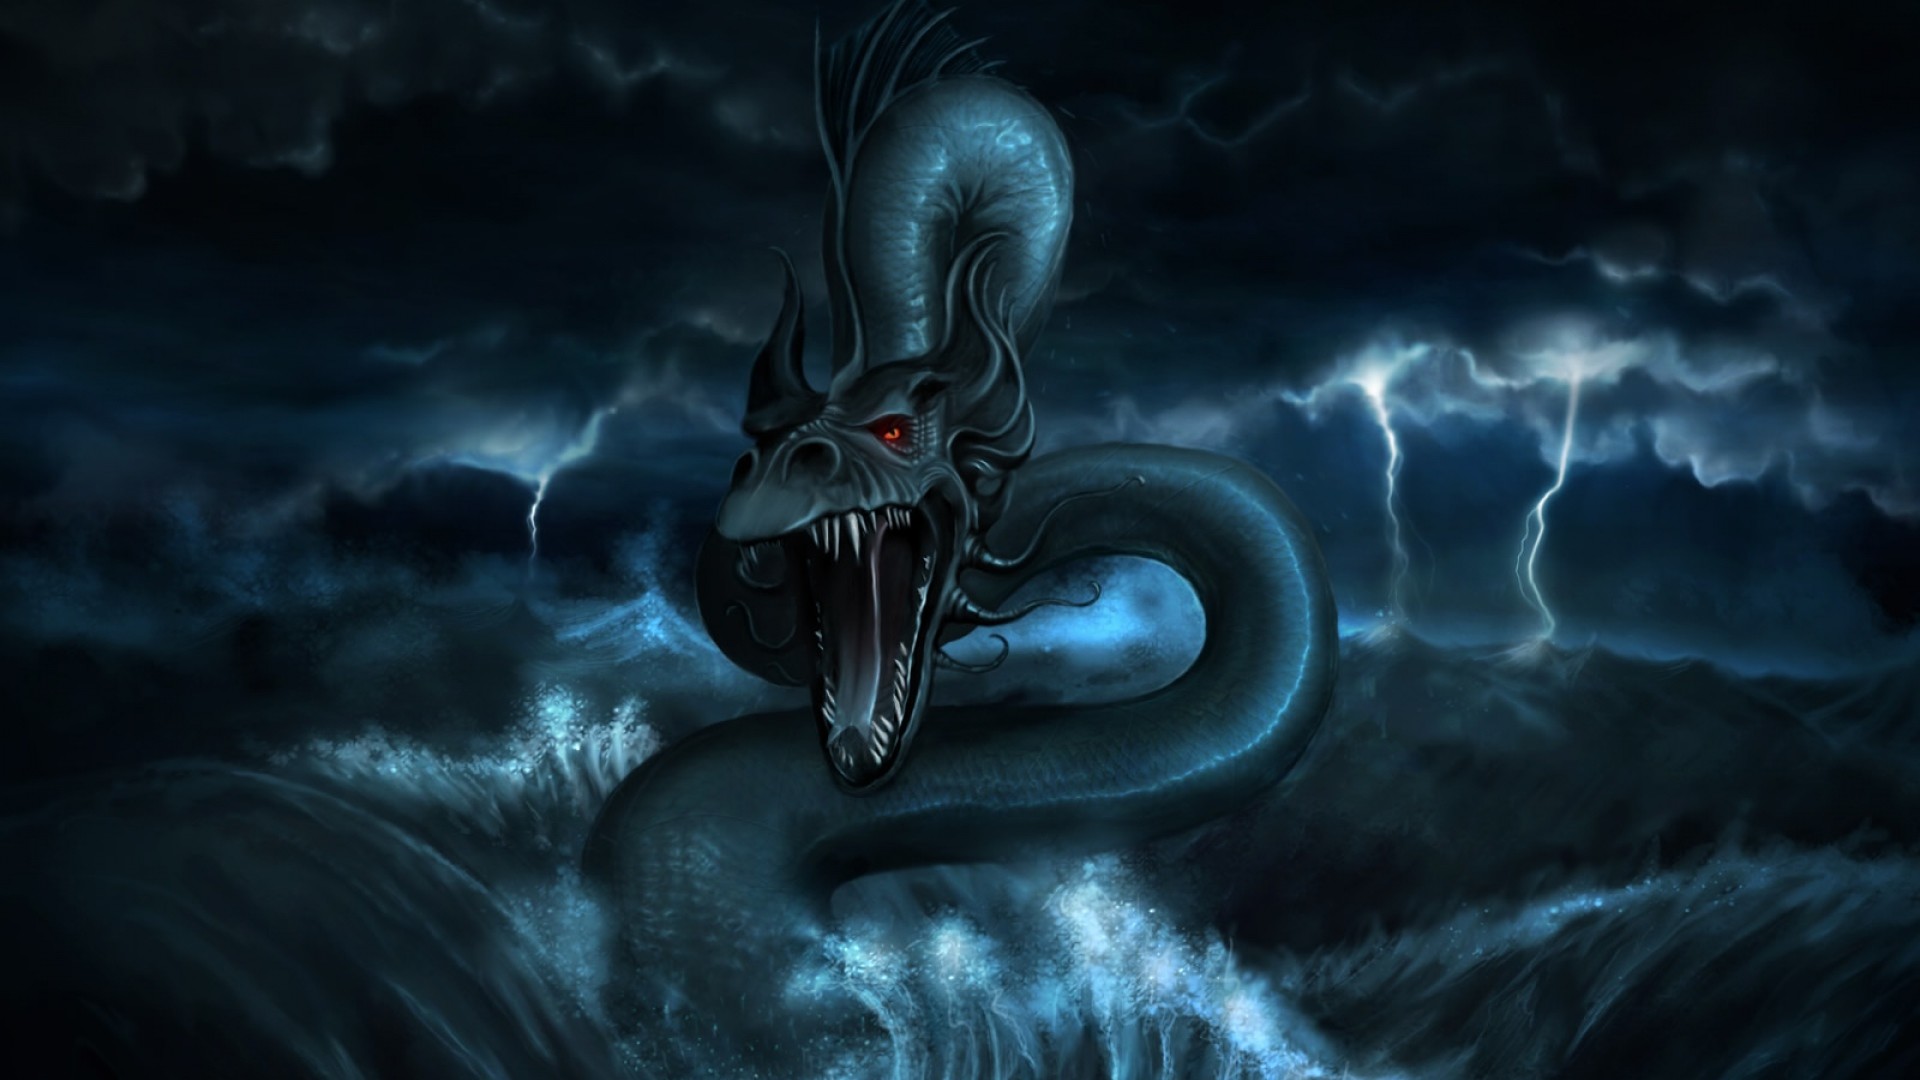 1920x1080 dragon_monster_water_storm_3616_.jpg